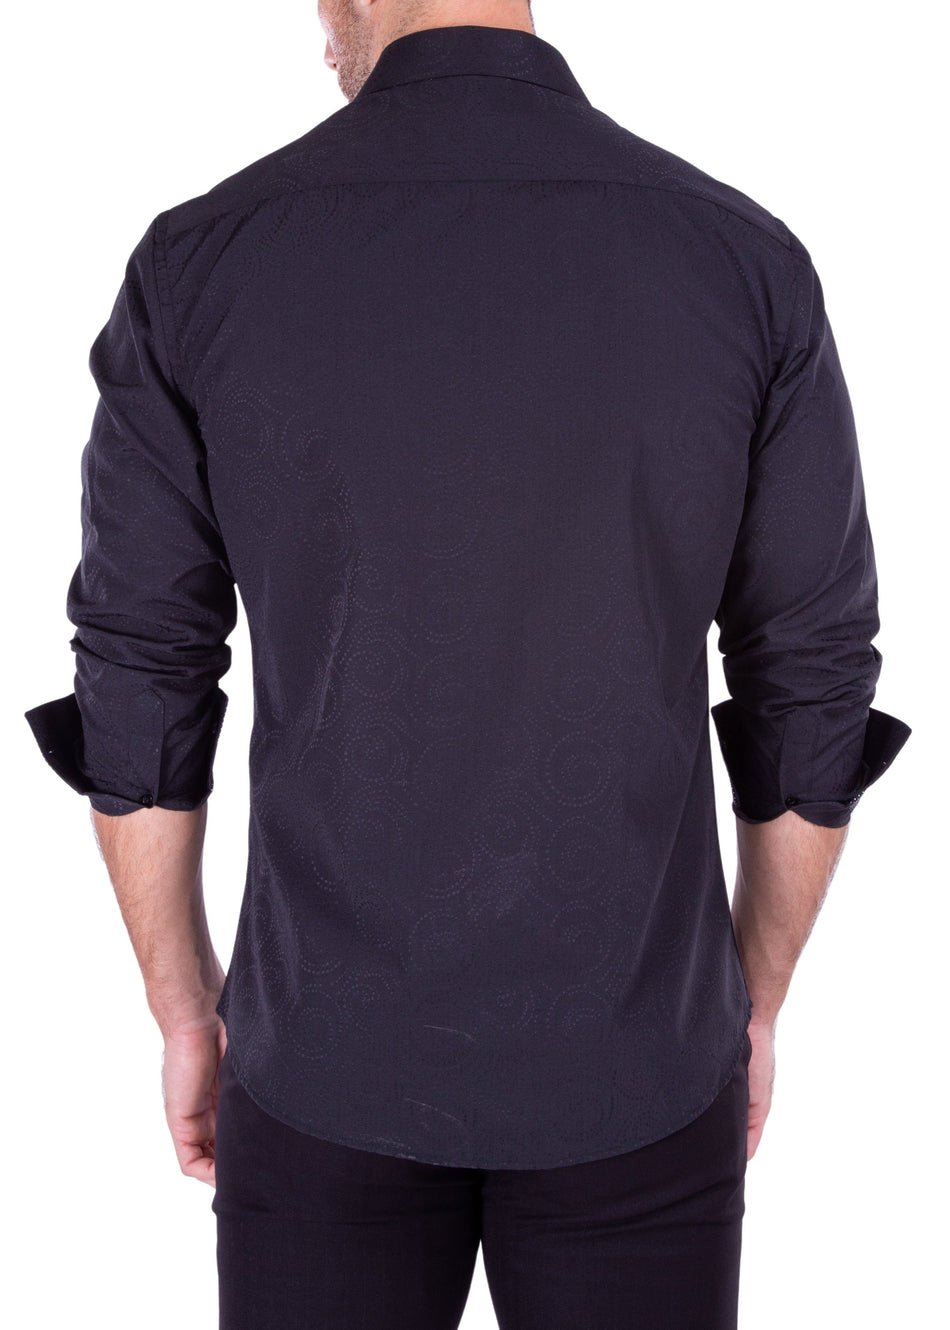 Pointillist Swirl Texture Long Sleeve Dress Shirt Solid Black